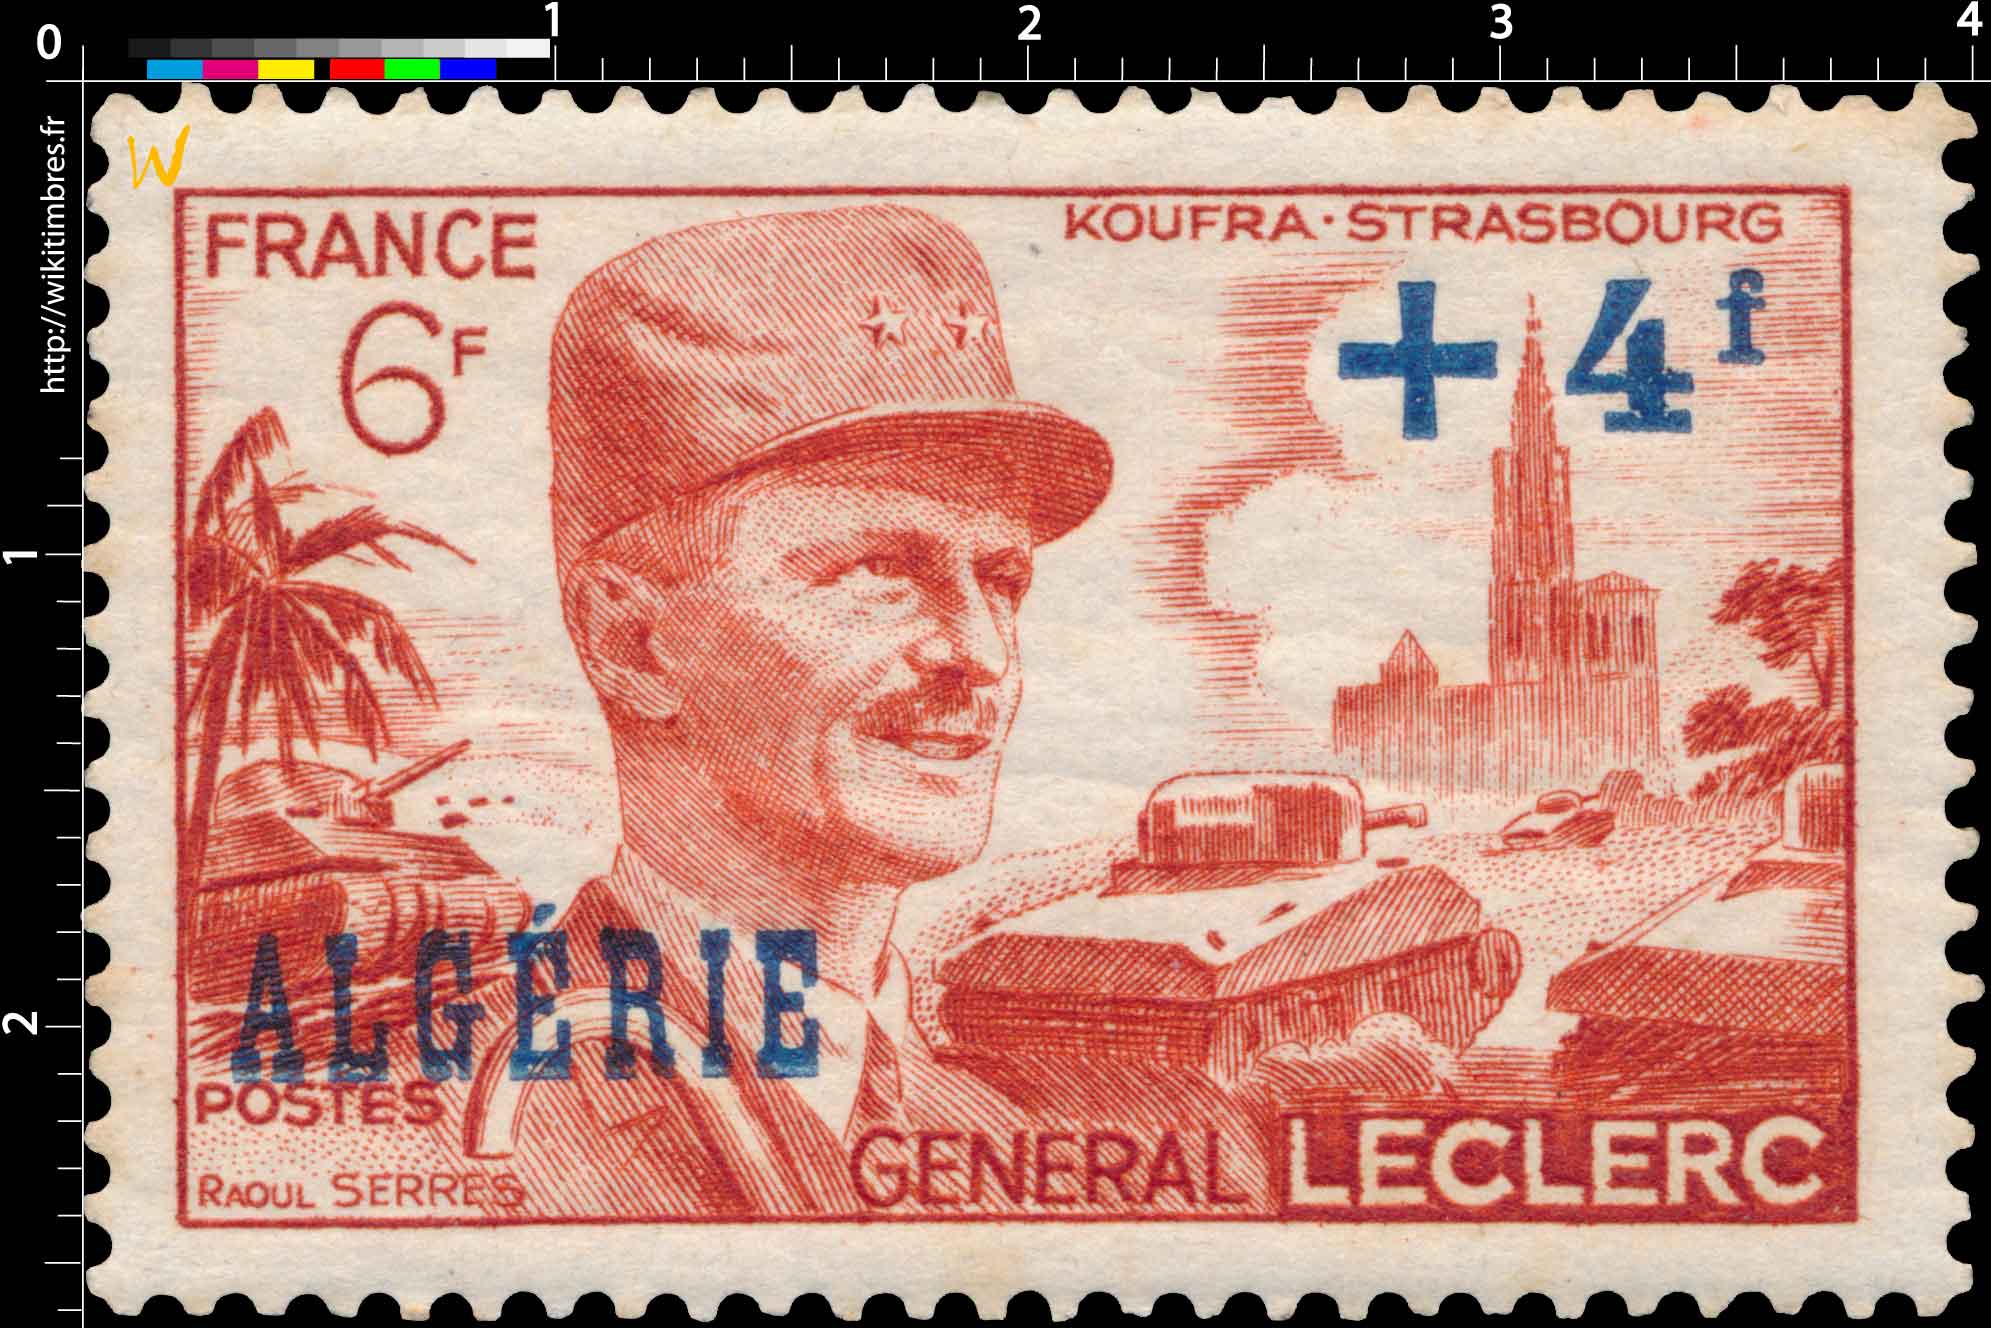 Algérie - Général Leclerc - Koufra Strasbourg